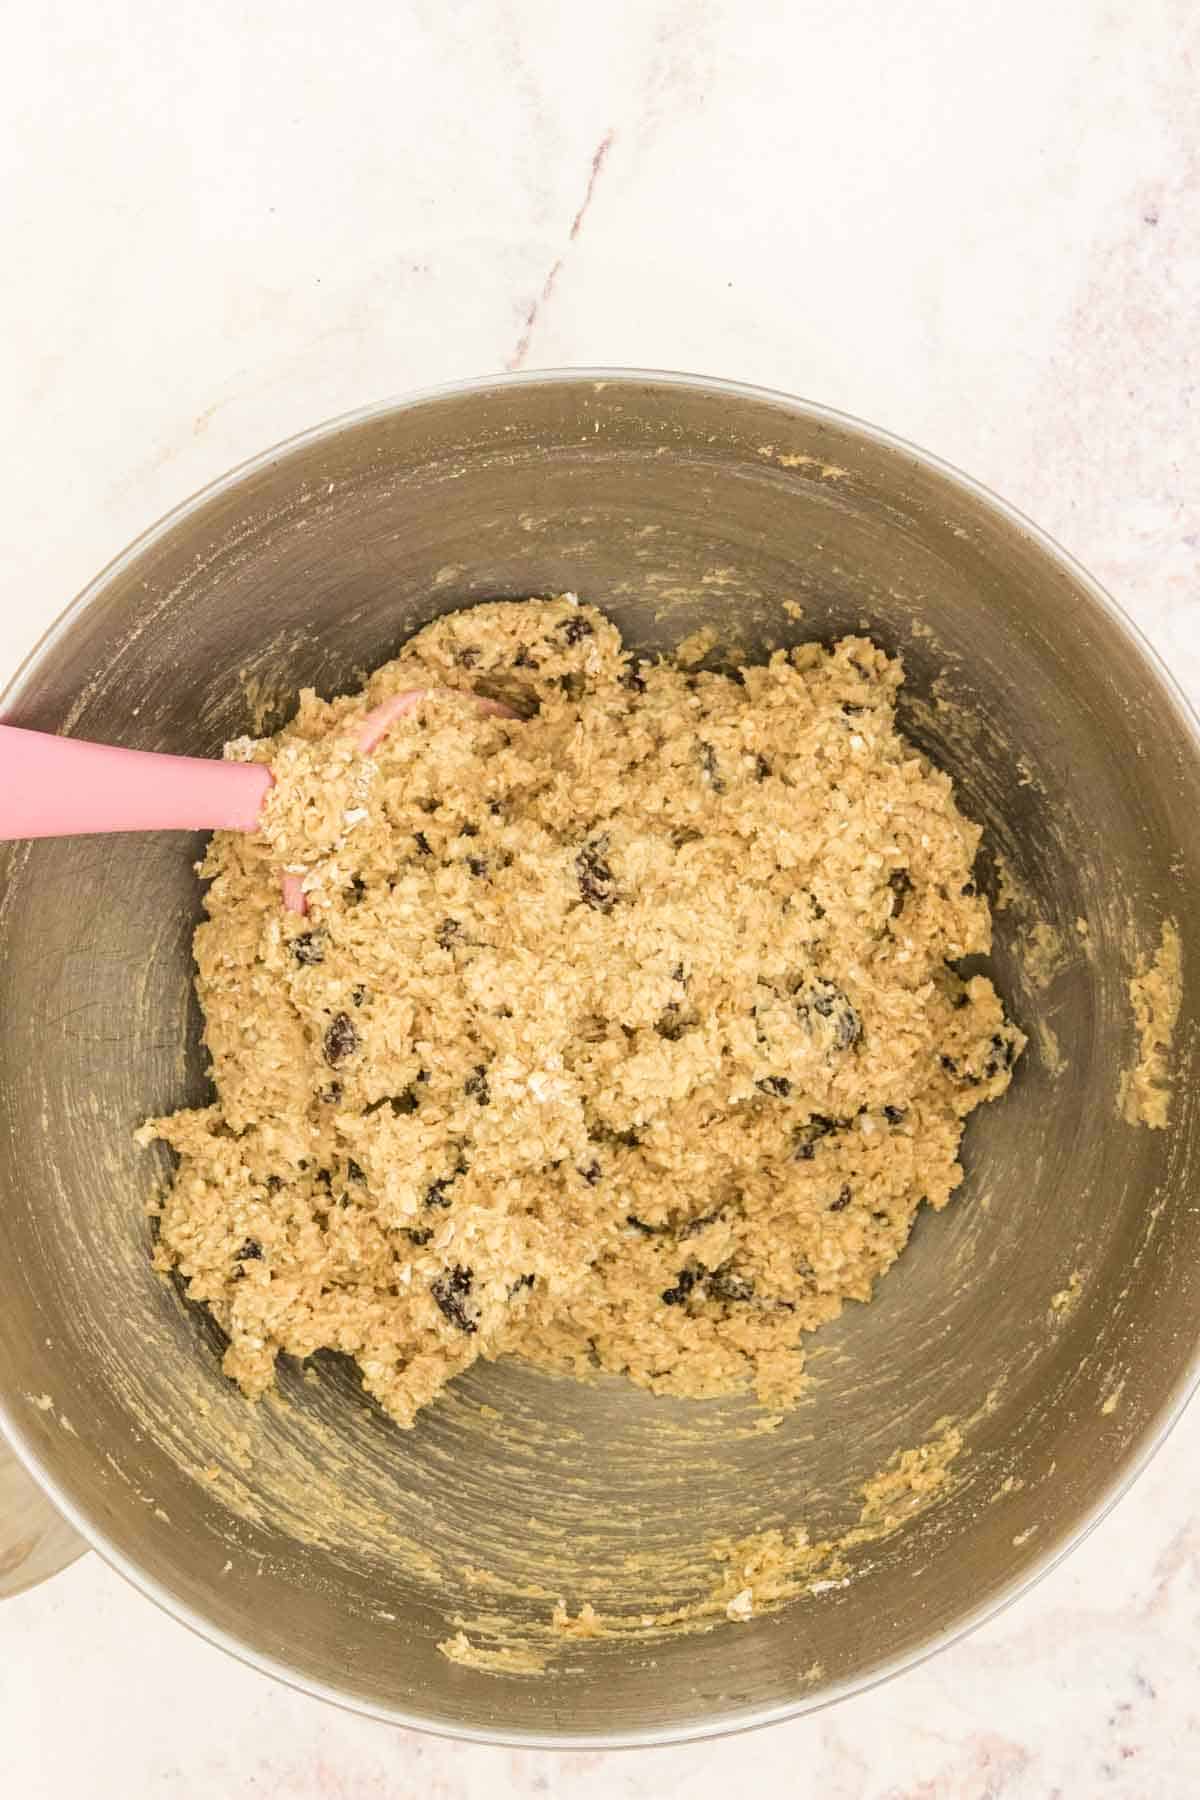 Gluten-free oatmeal raisin cookie dough in a mixing bowl.